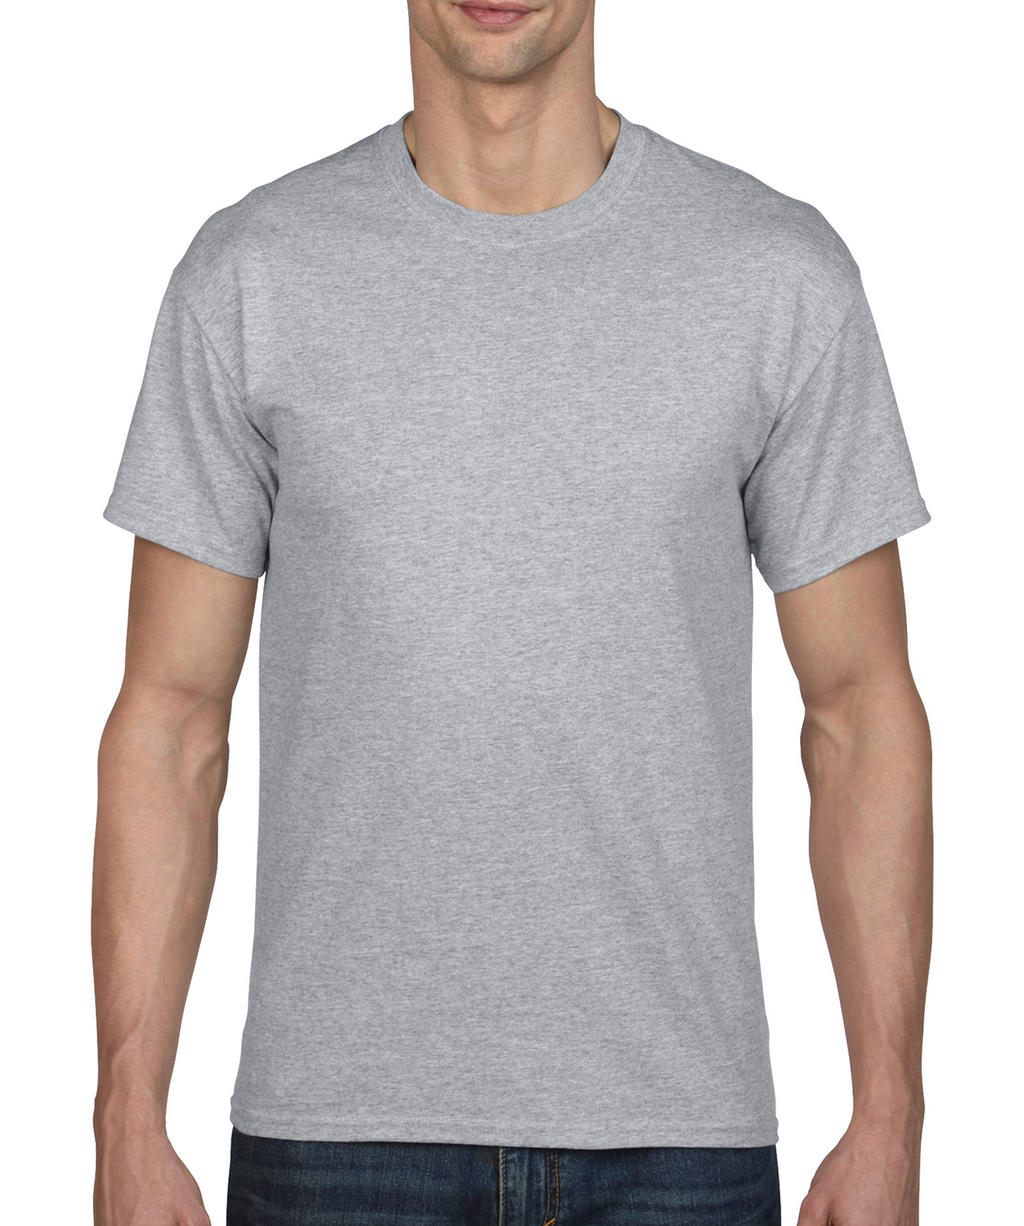  DryBlend? Adult T-Shirt in Farbe Sport Grey